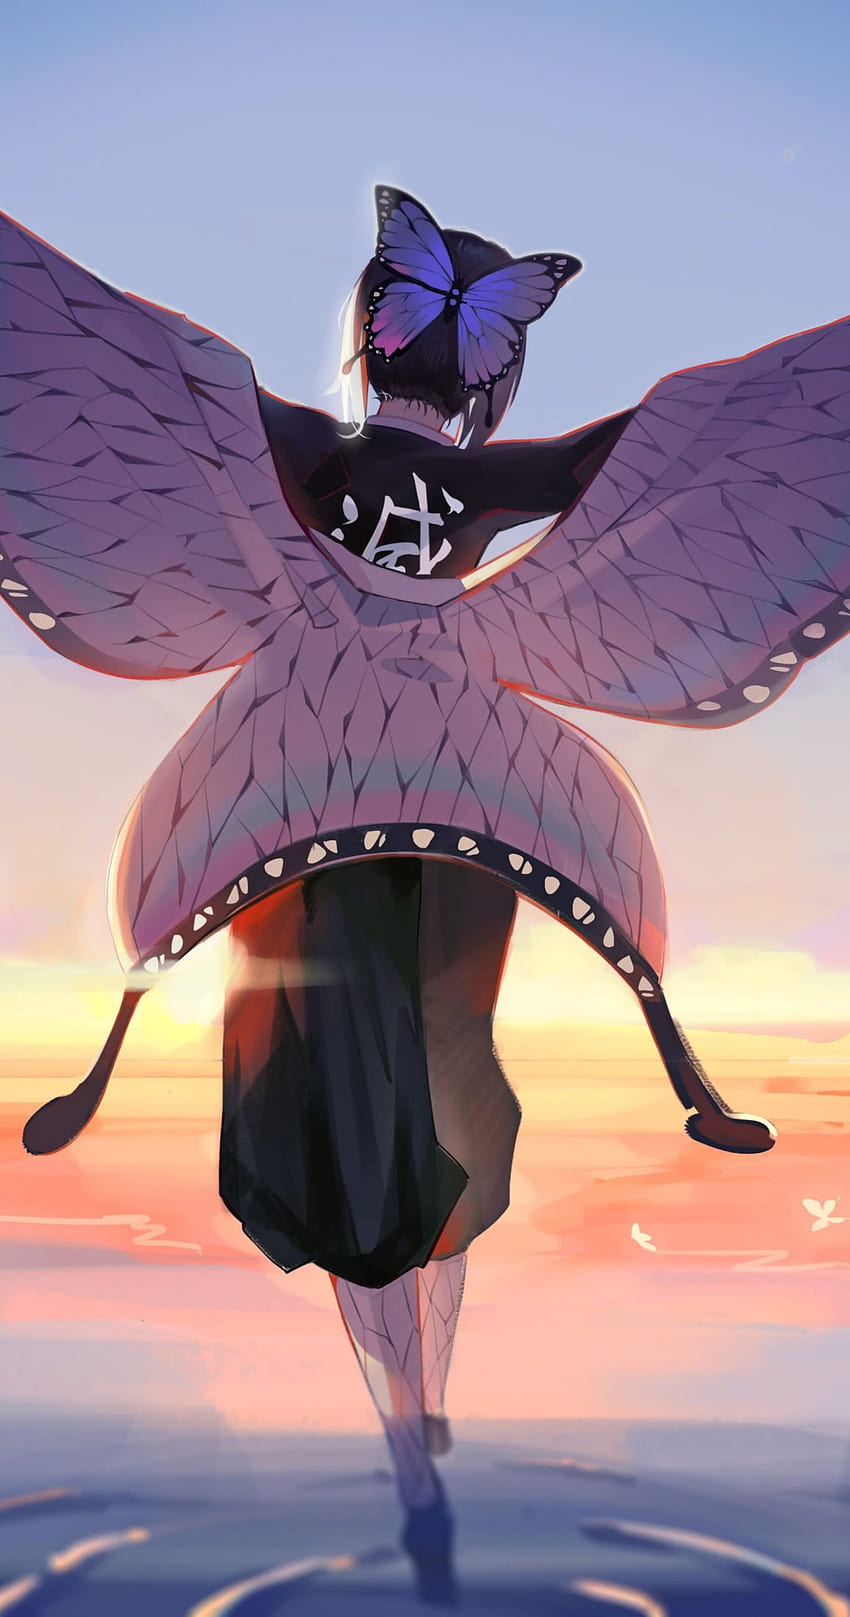 Anime Demon Slayer Kimetsu no Yaiba Butterfly Girl Shinobu Kochou - Mise à jour, Meilleur fond d'écran iPhone et iPhone : Mise à jour, Meilleur fond d'écran iPhone et iPhone, Demon Slayer Shinobu Fond d'écran de téléphone HD